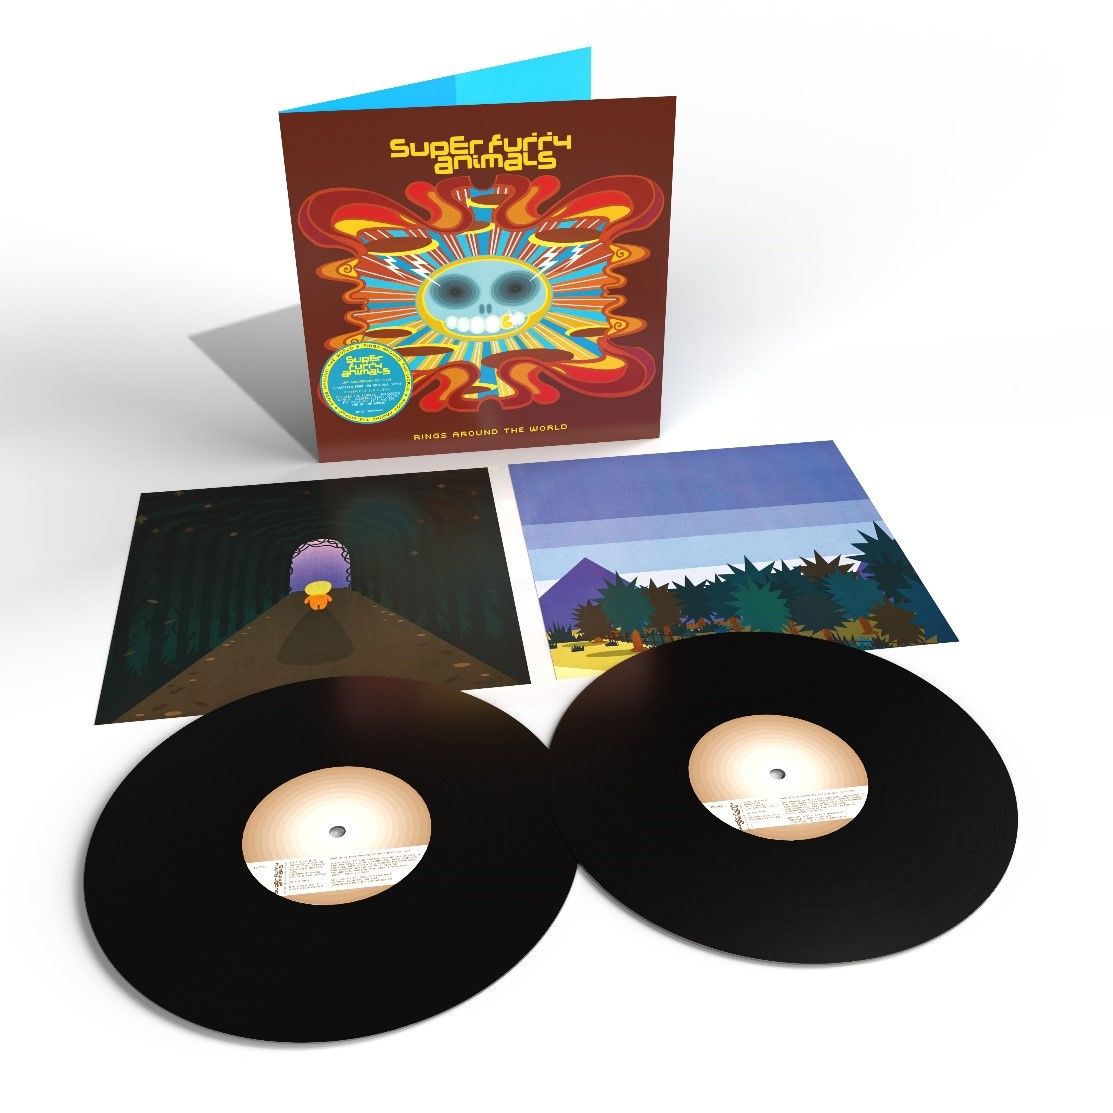 Rings Around The World: 20th Anniversary Edition Reissue Vinyl 2LP